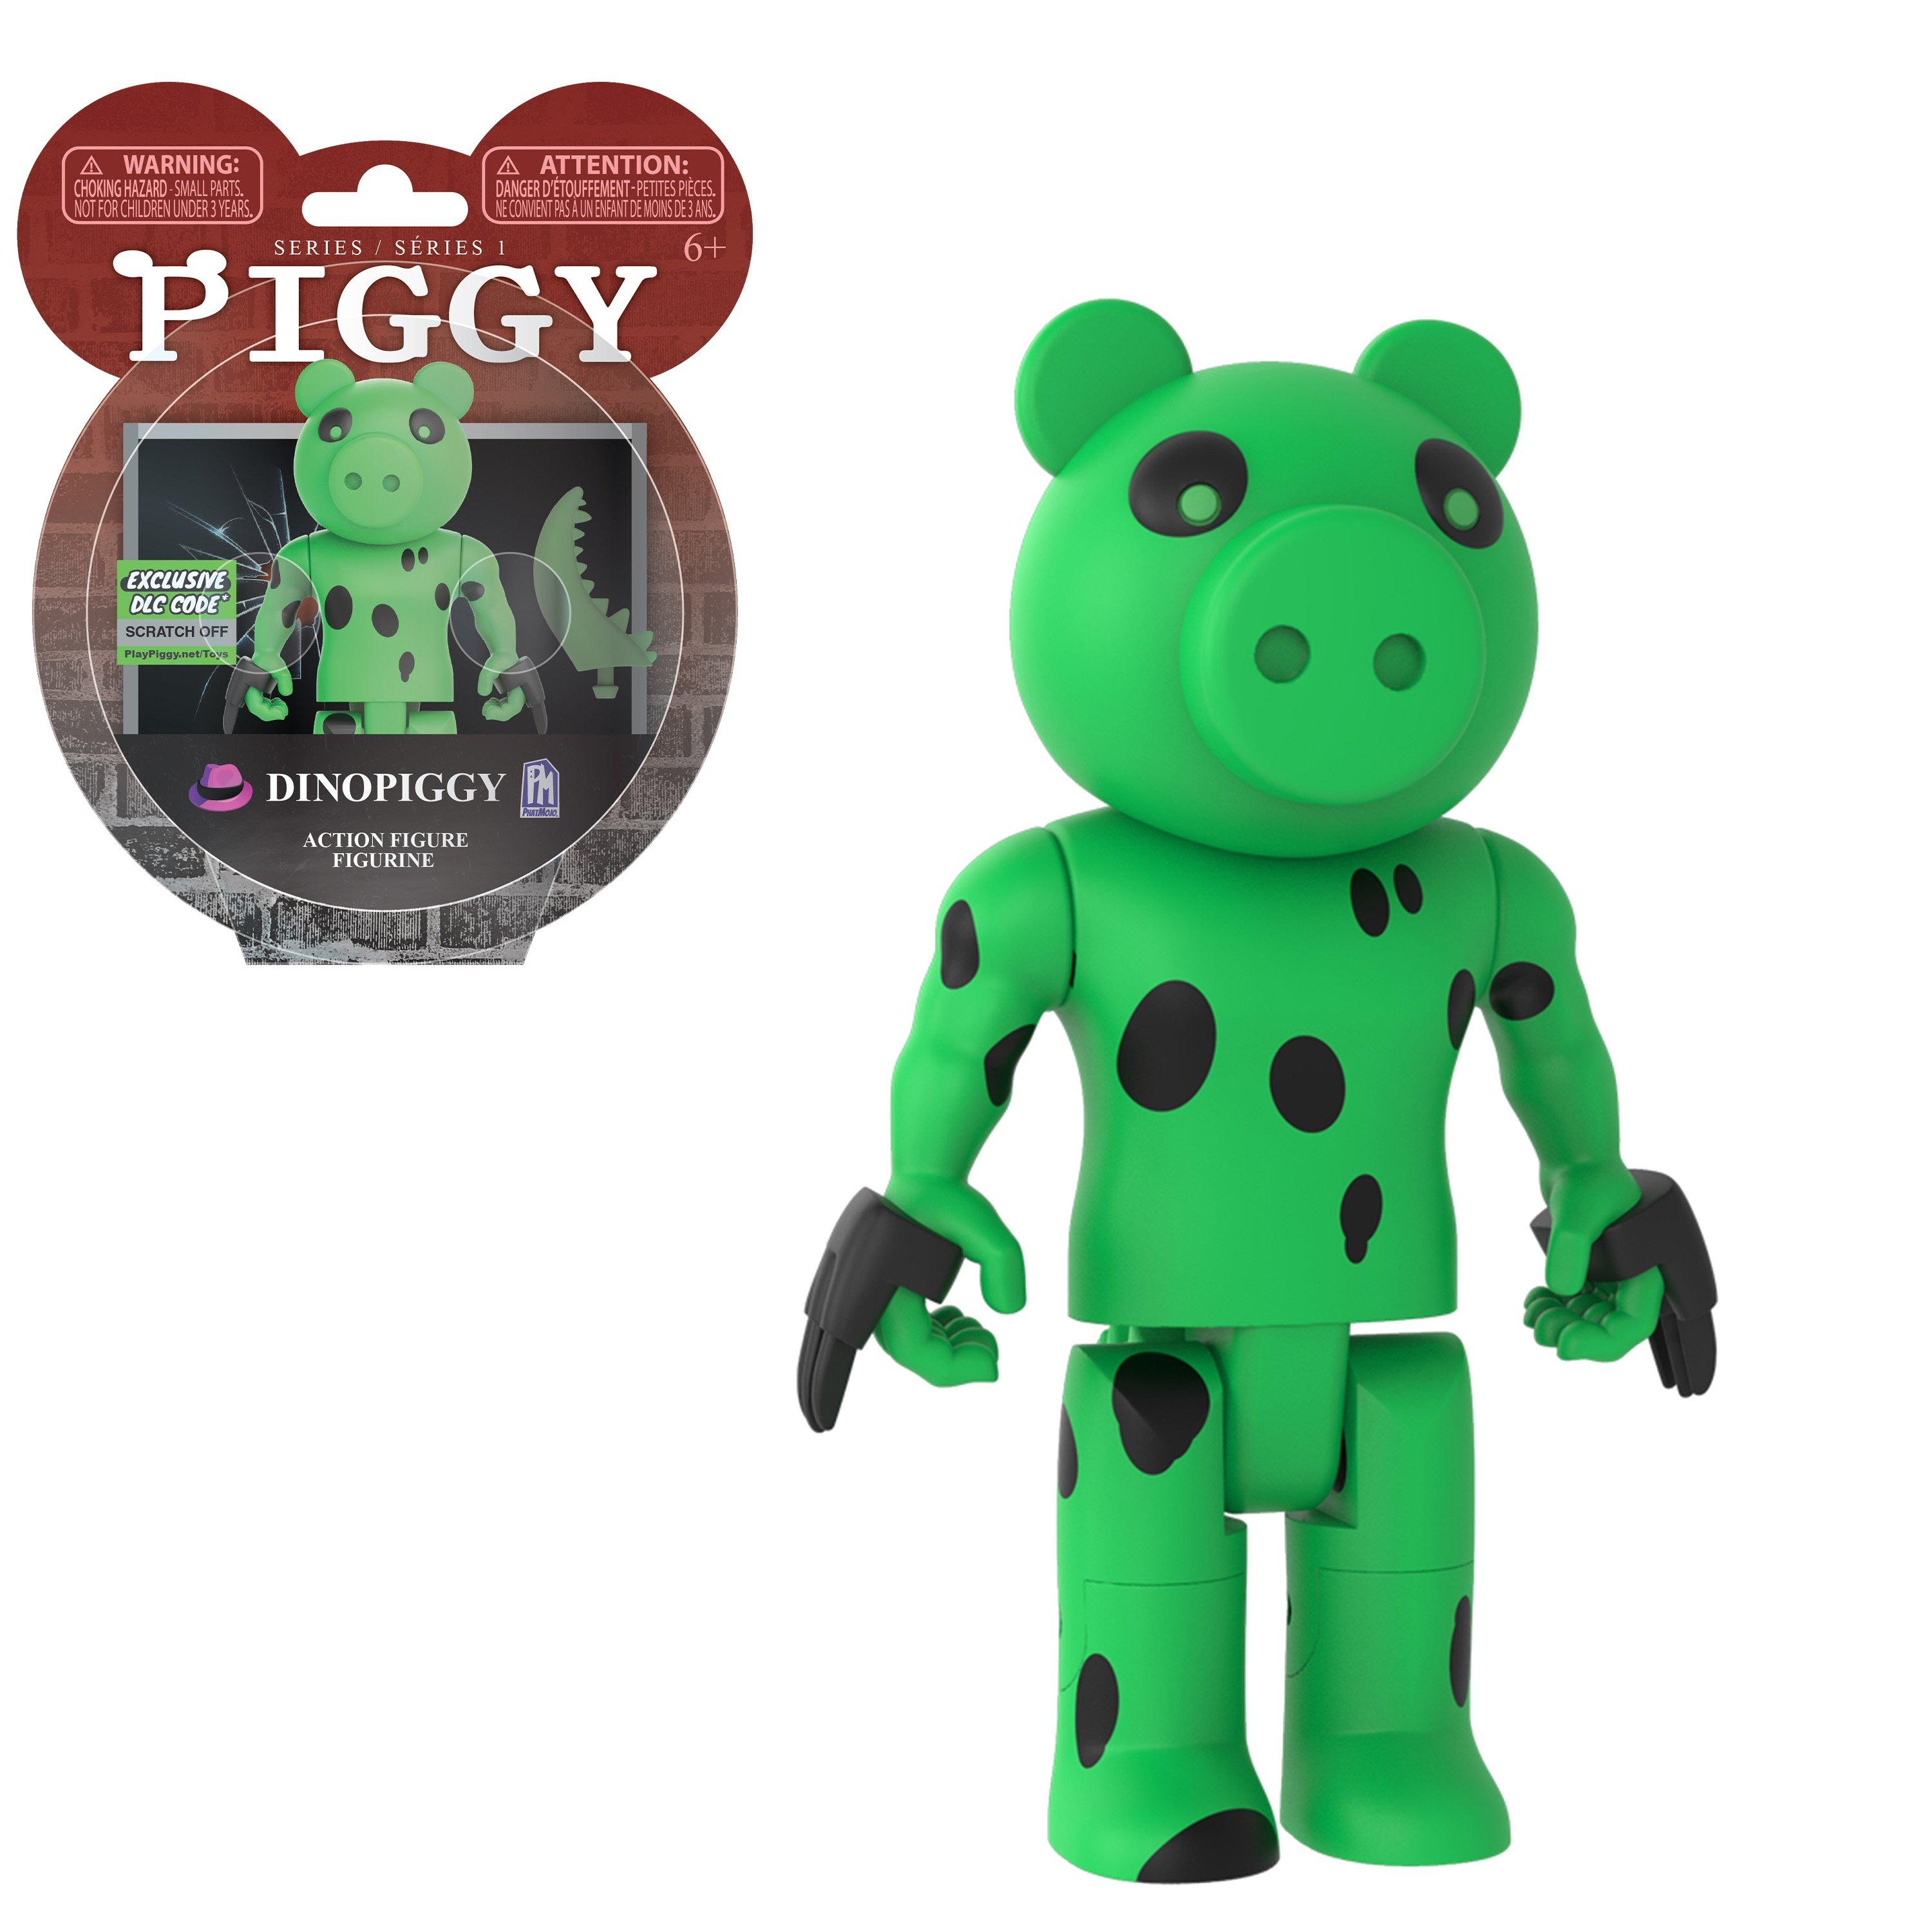 Piggy Dinopiggy Series 1 Action Figure Gamestop - where to buy roblox figures